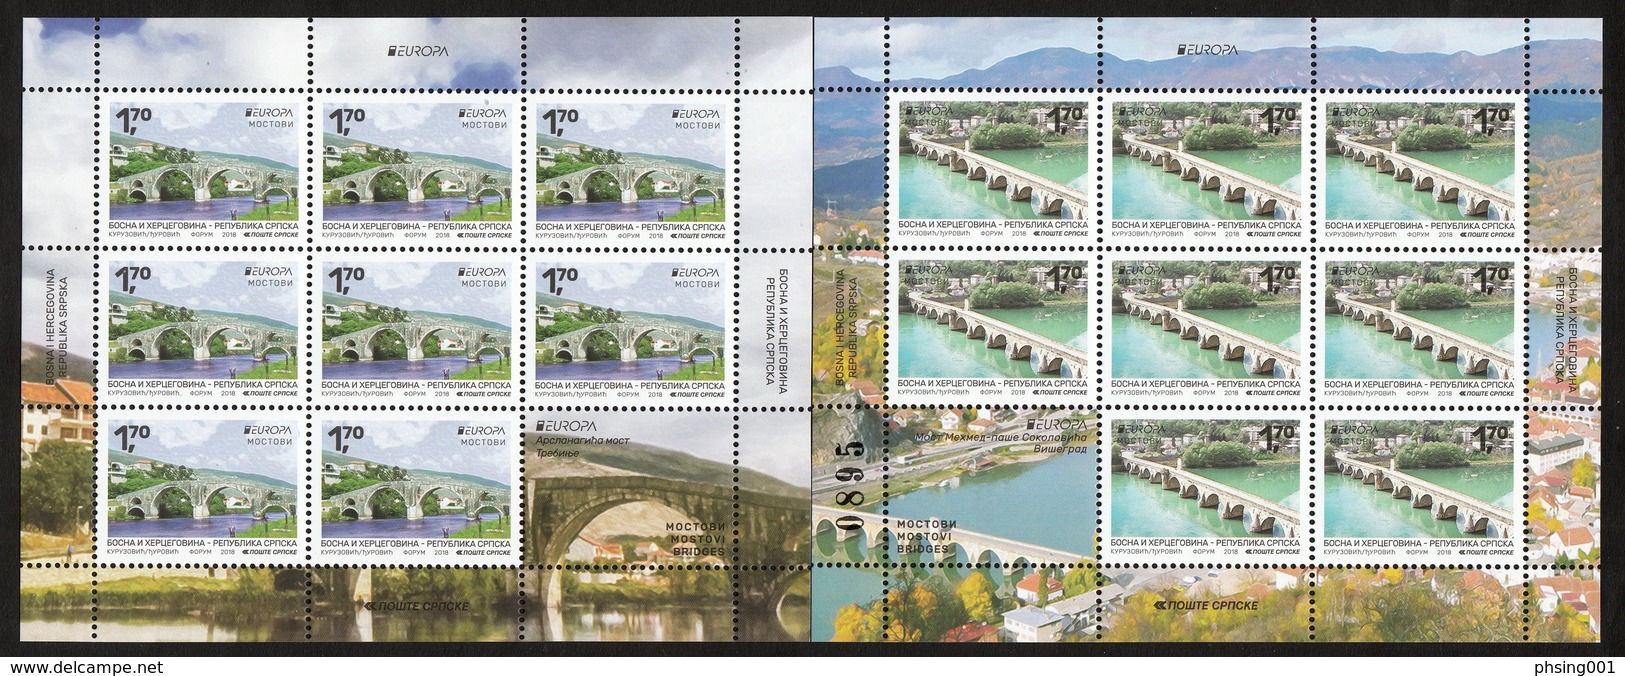 Bosnia Serbia 2018 Europa CEPT Bridges Bruecken Ponts Architecture, Mini Sheet MNH - 2018